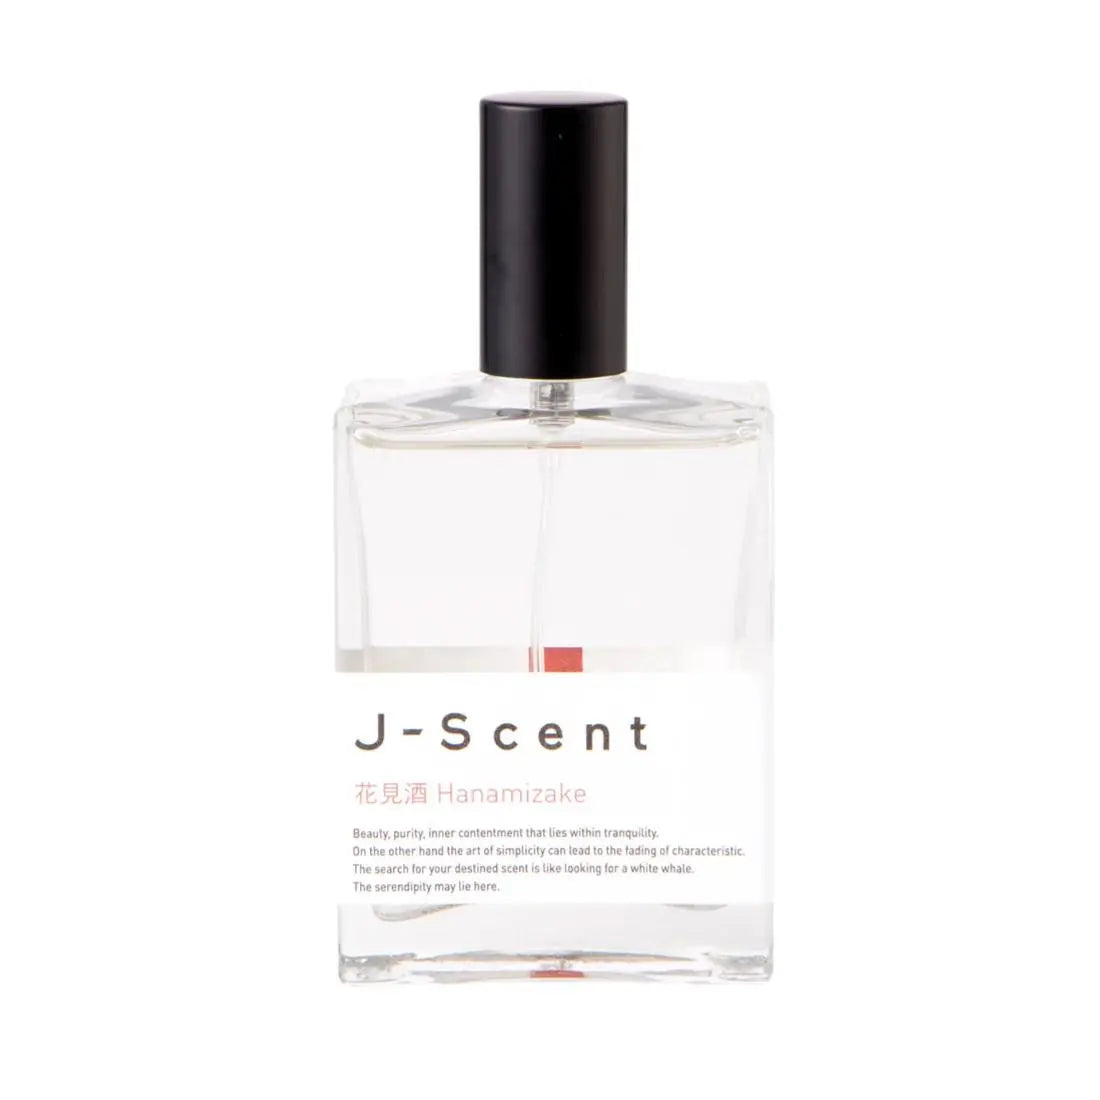 J-scent هانميزاكي - 50 مل